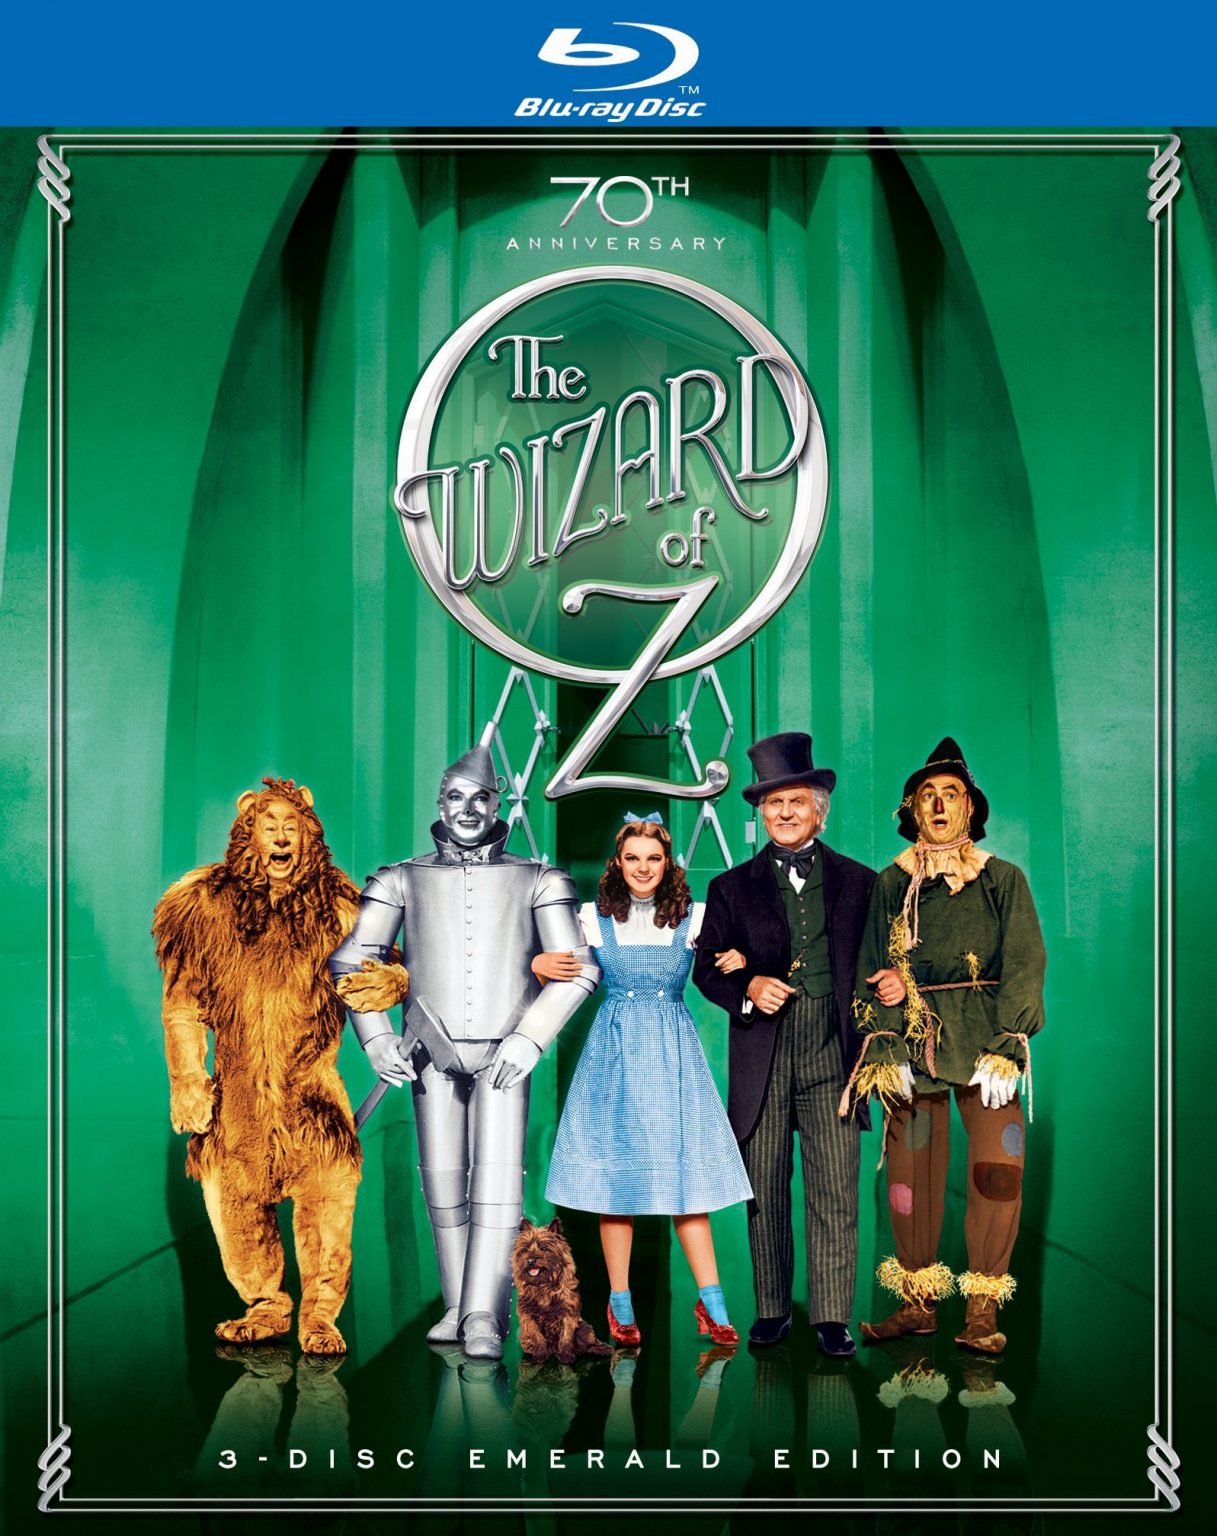 The Wizard of Oz BluRay (70th Anniversary Edition 3Disc Emerald